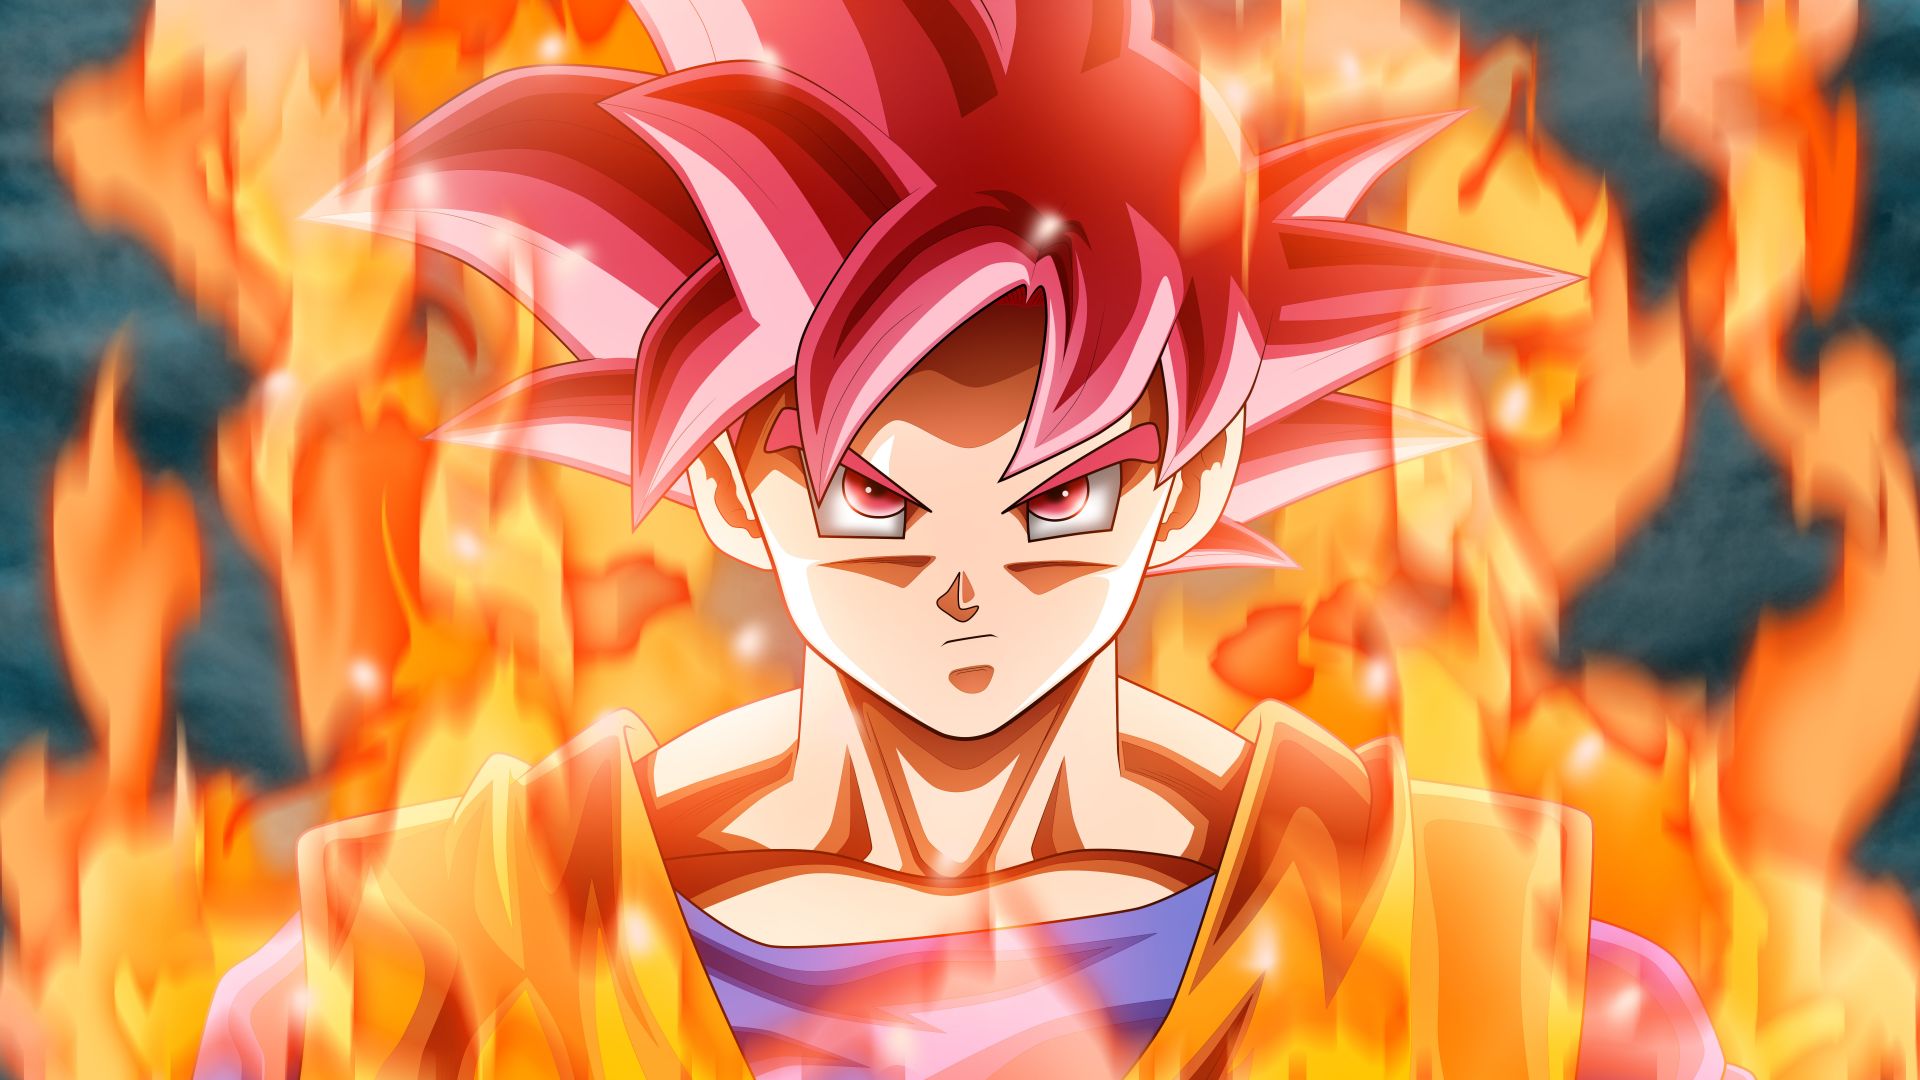 Desktop Wallpaper 8k Goku Dragon Ball Super Fire Hd Image Picture Background D11fda